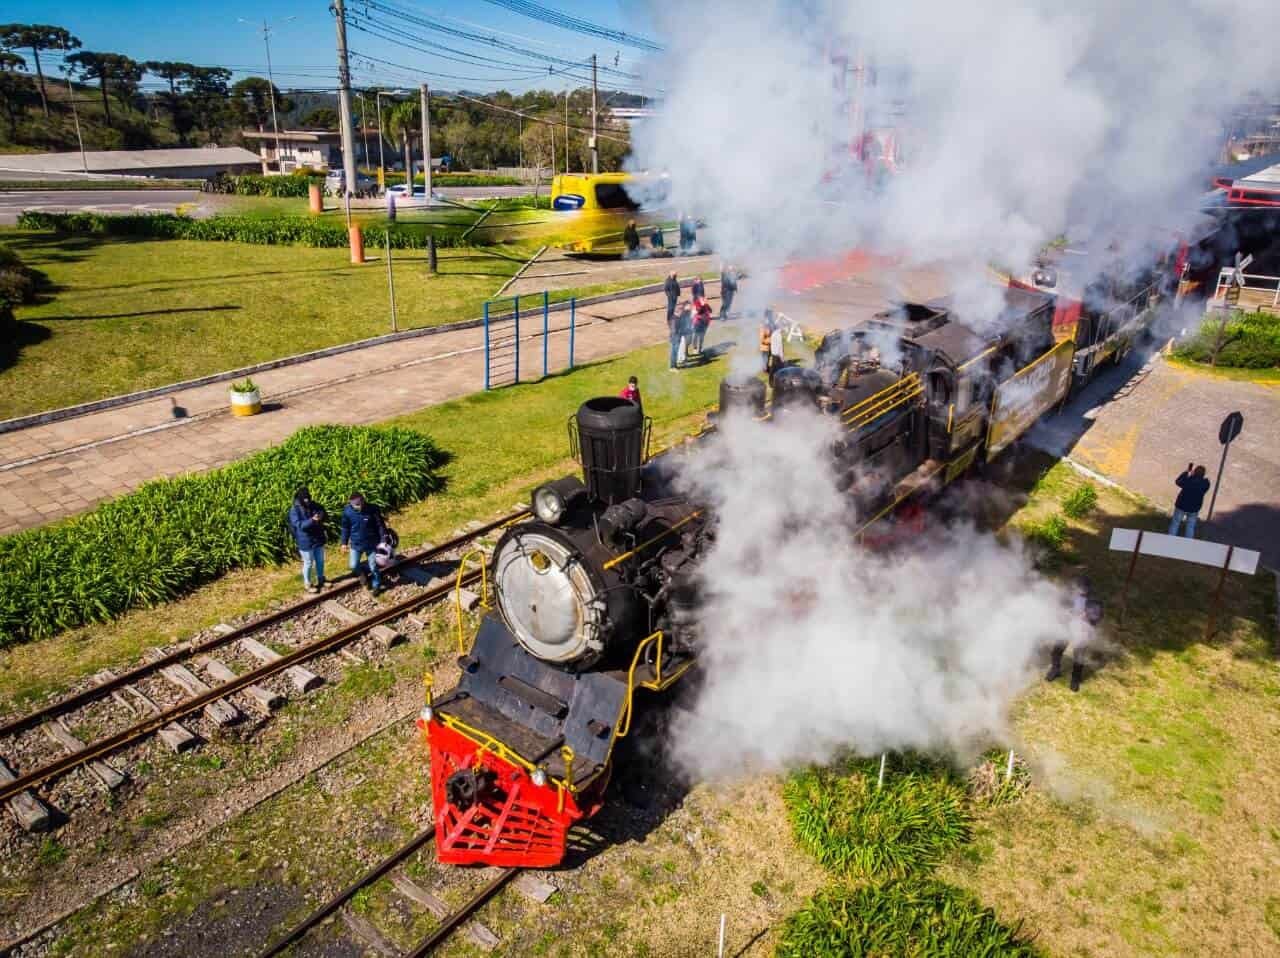 Maria-fumaça: passeios pelo Brasil em charmosas locomotivas